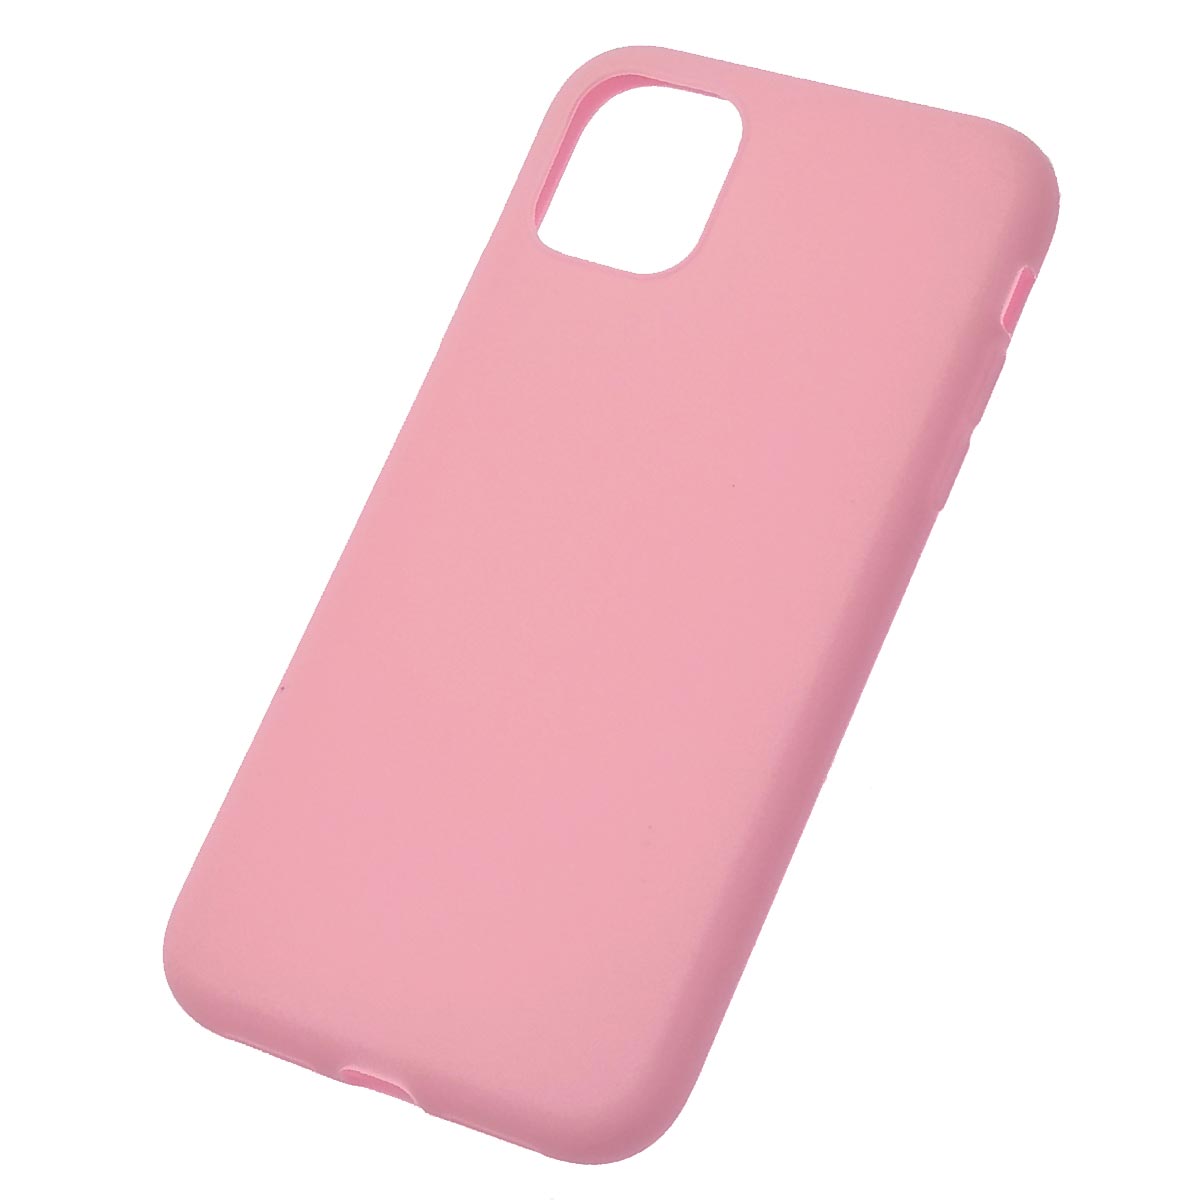 Чехол накладка SOFT TOUCH для APPLE iPhone 11, силикон, матовый, цвет розовый